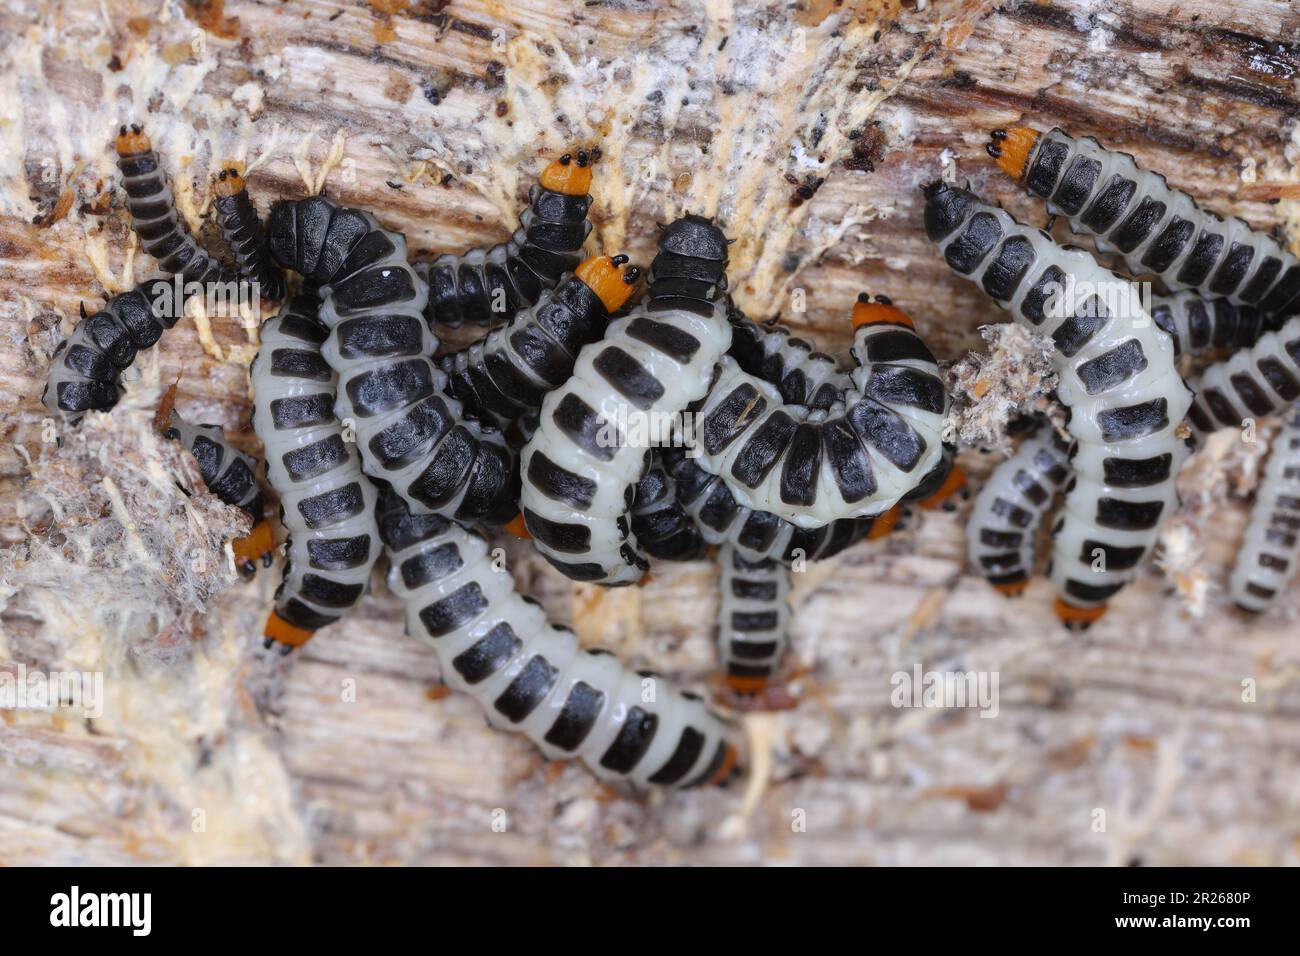 Lygistopterus sanguineus larva, larvae (Predatory) on wood. Net-winged beetles in the family Lycidae. Stock Photo